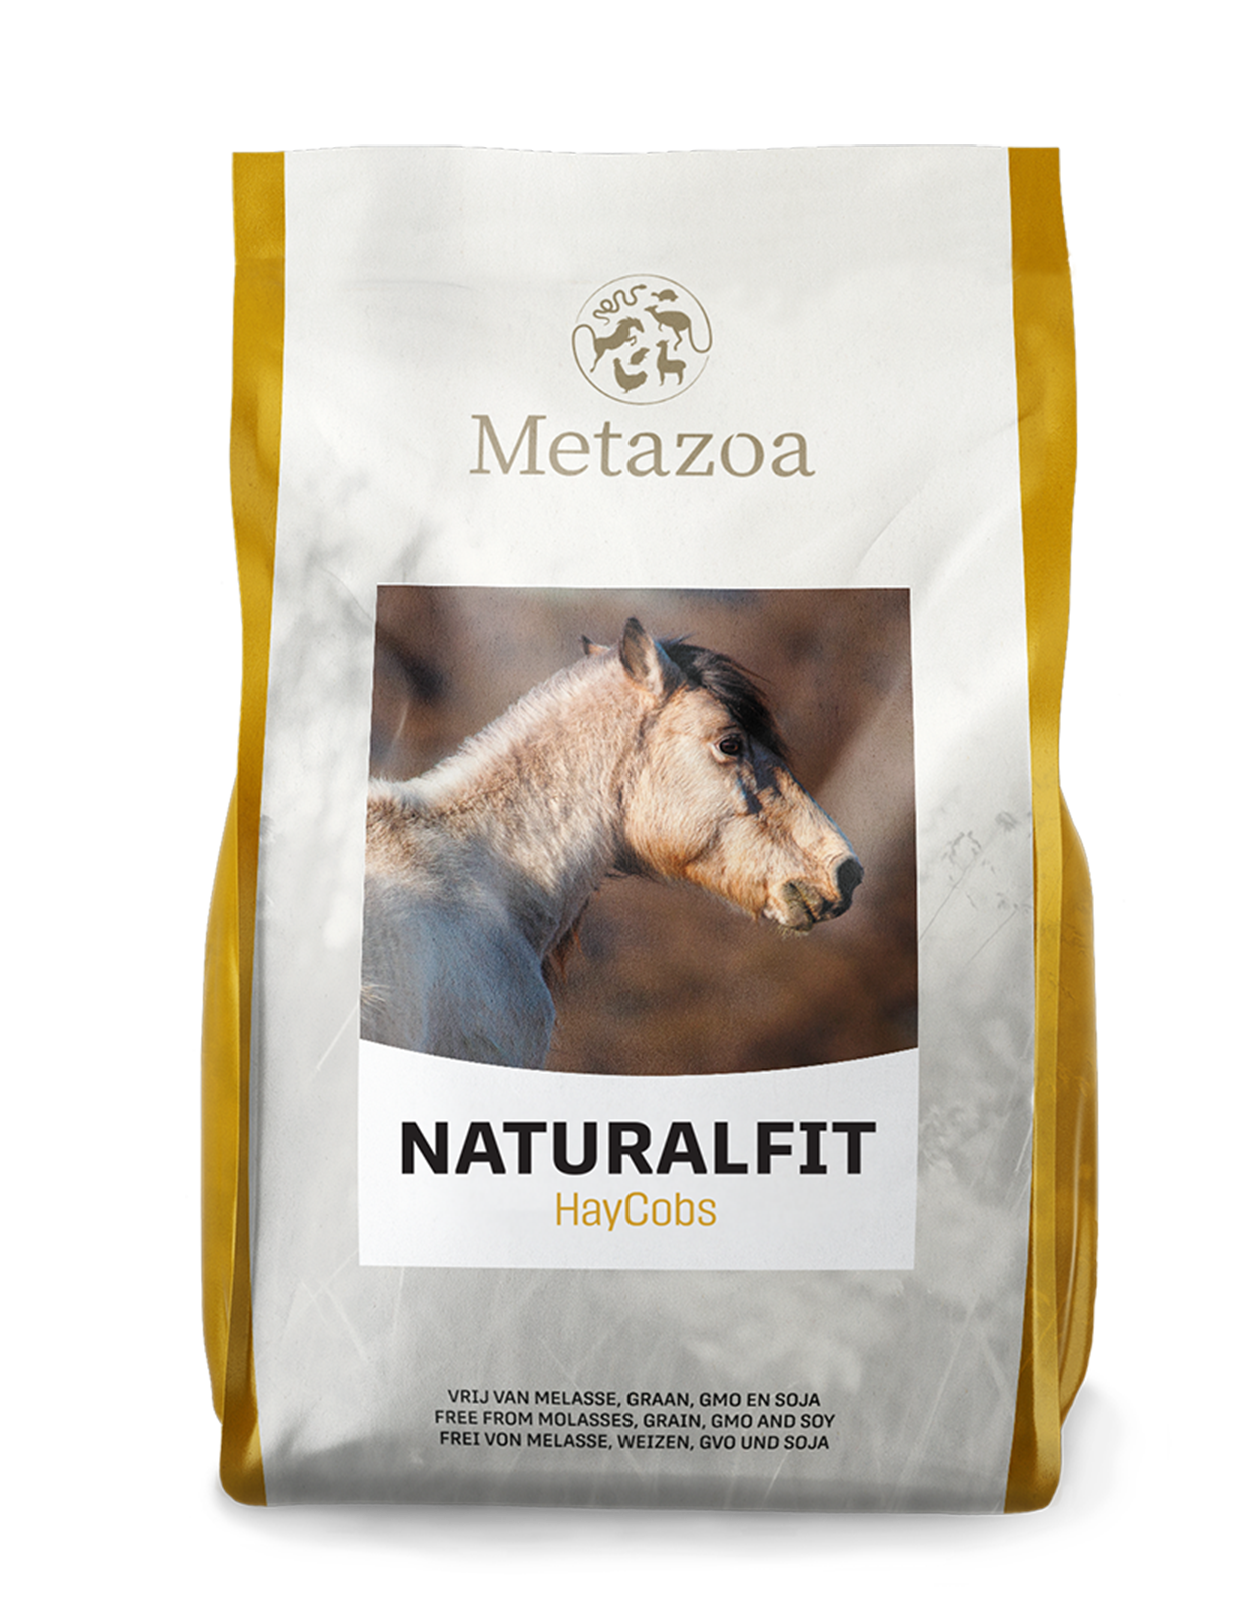 Download Metazoa NaturalFit HayCobs verpakking 15 kg EAN 4260176355304